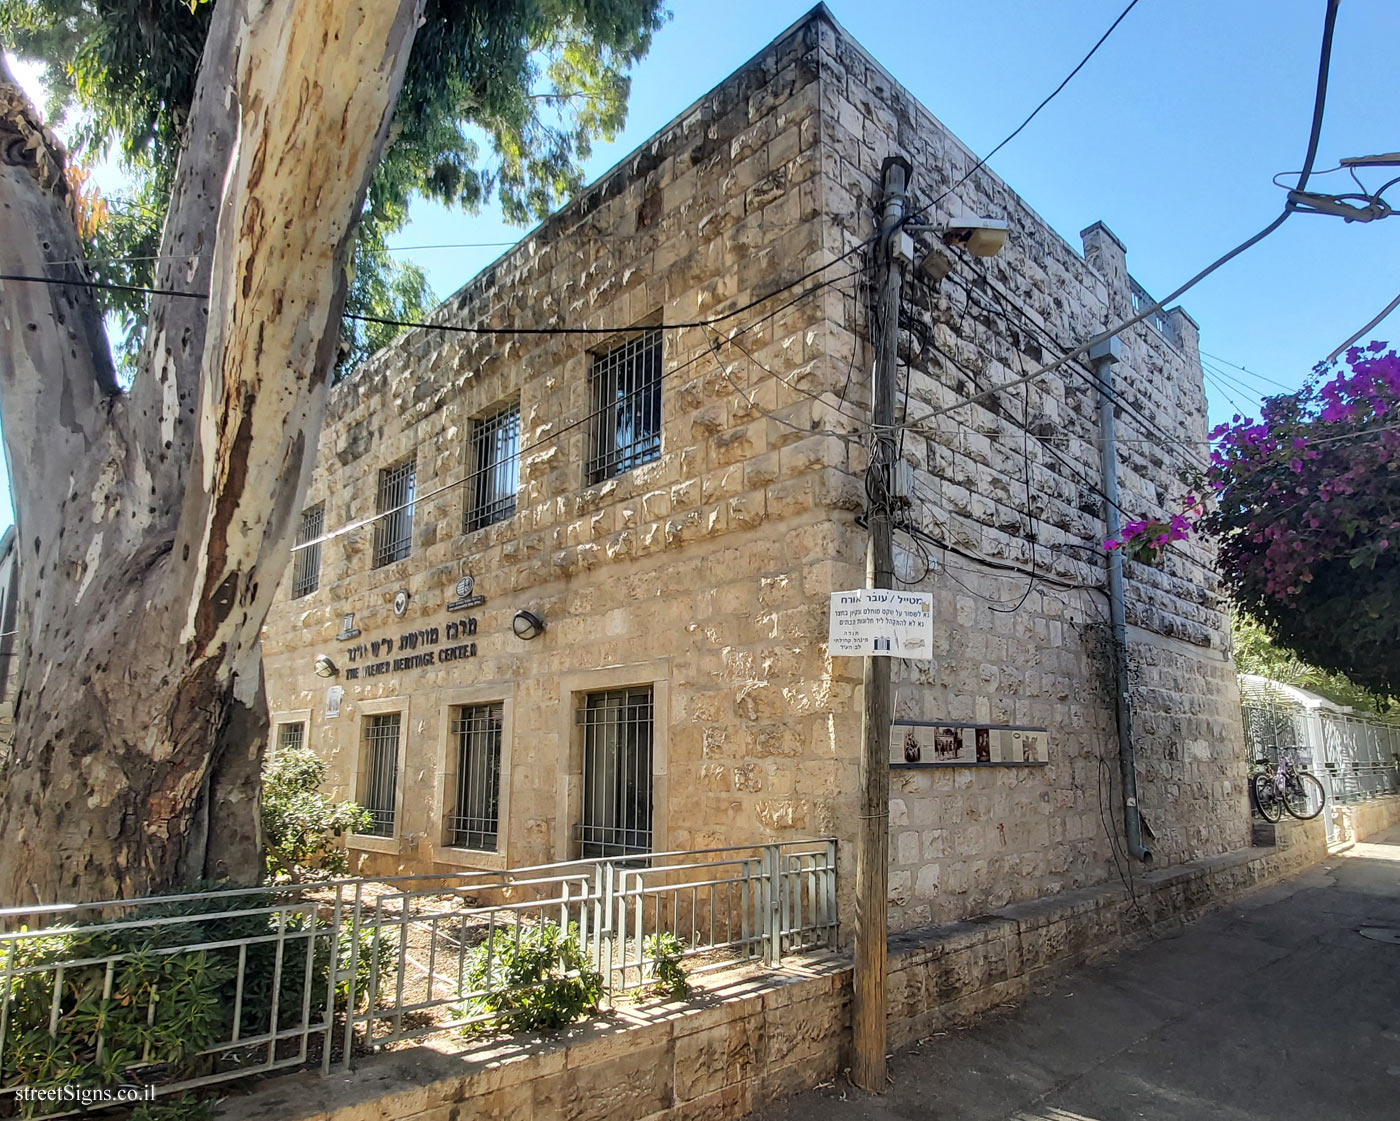 The Wiener house - Einayim LaMishpat St 1, Jerusalem, Israel